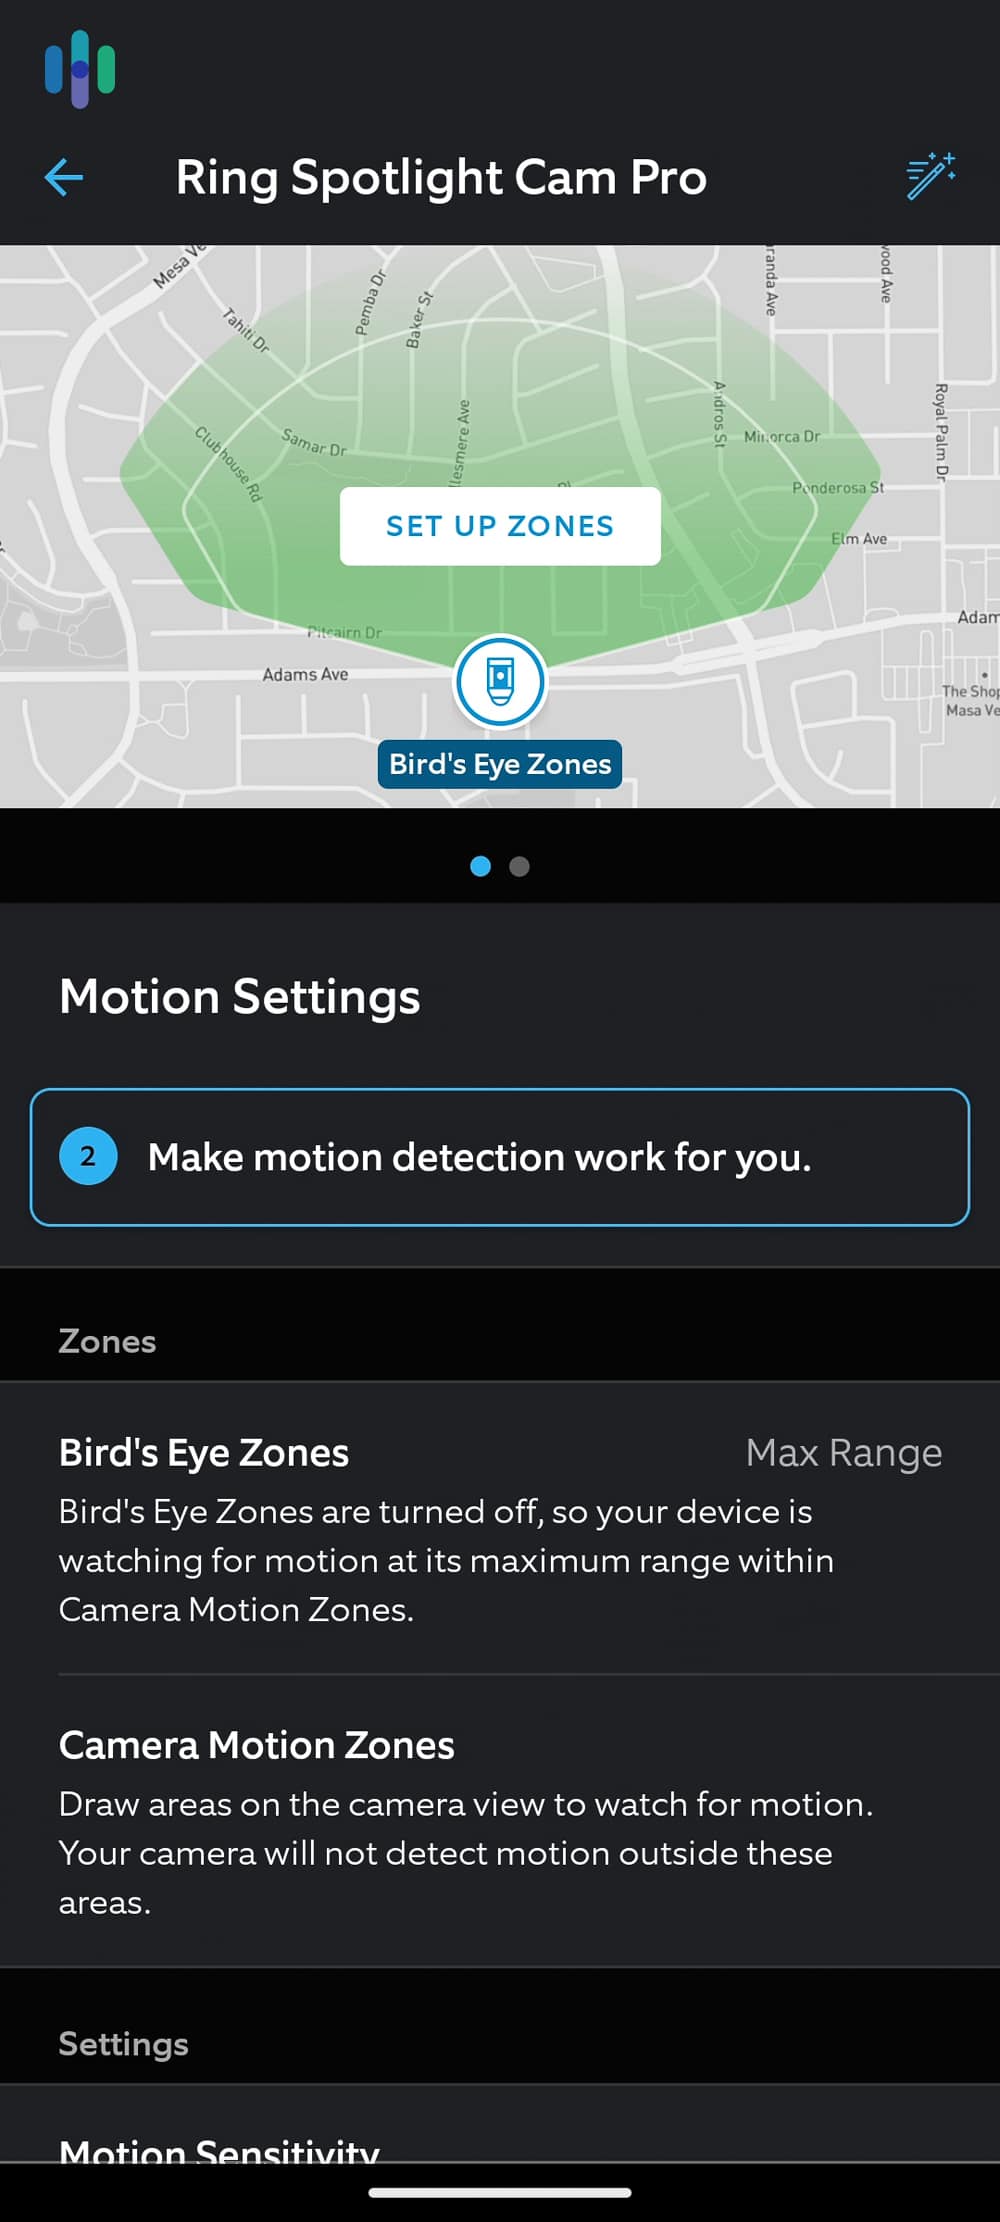 Ring Spotlight Cam Pro motion settings on the app